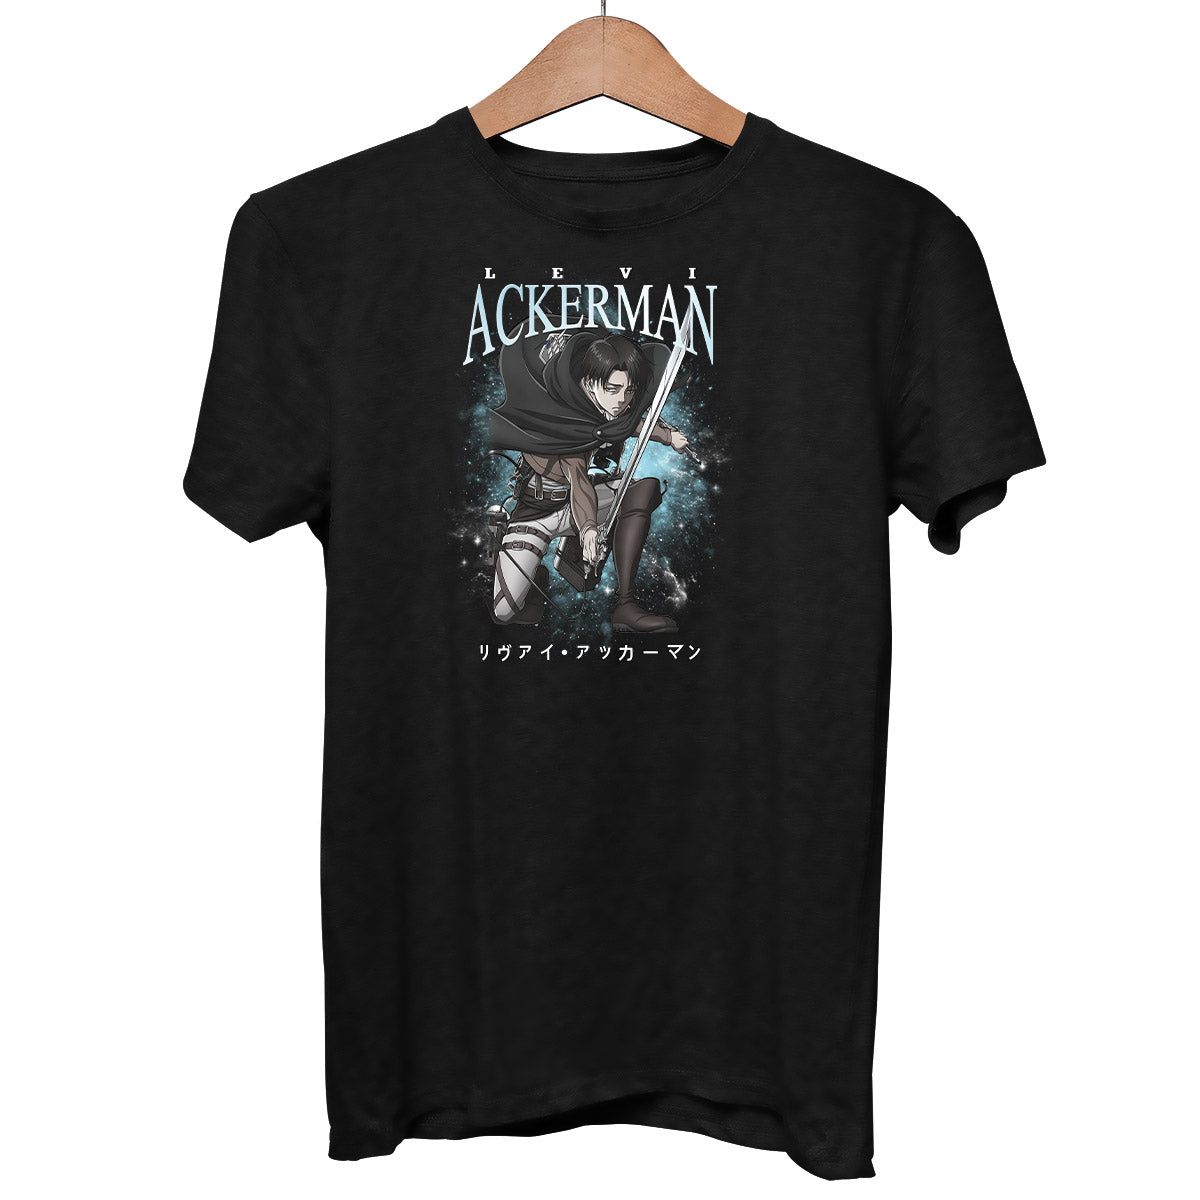 Levi Ackerman Manga AOT Attack On Titan Anime Gift Adult Unisex Black T-shirt